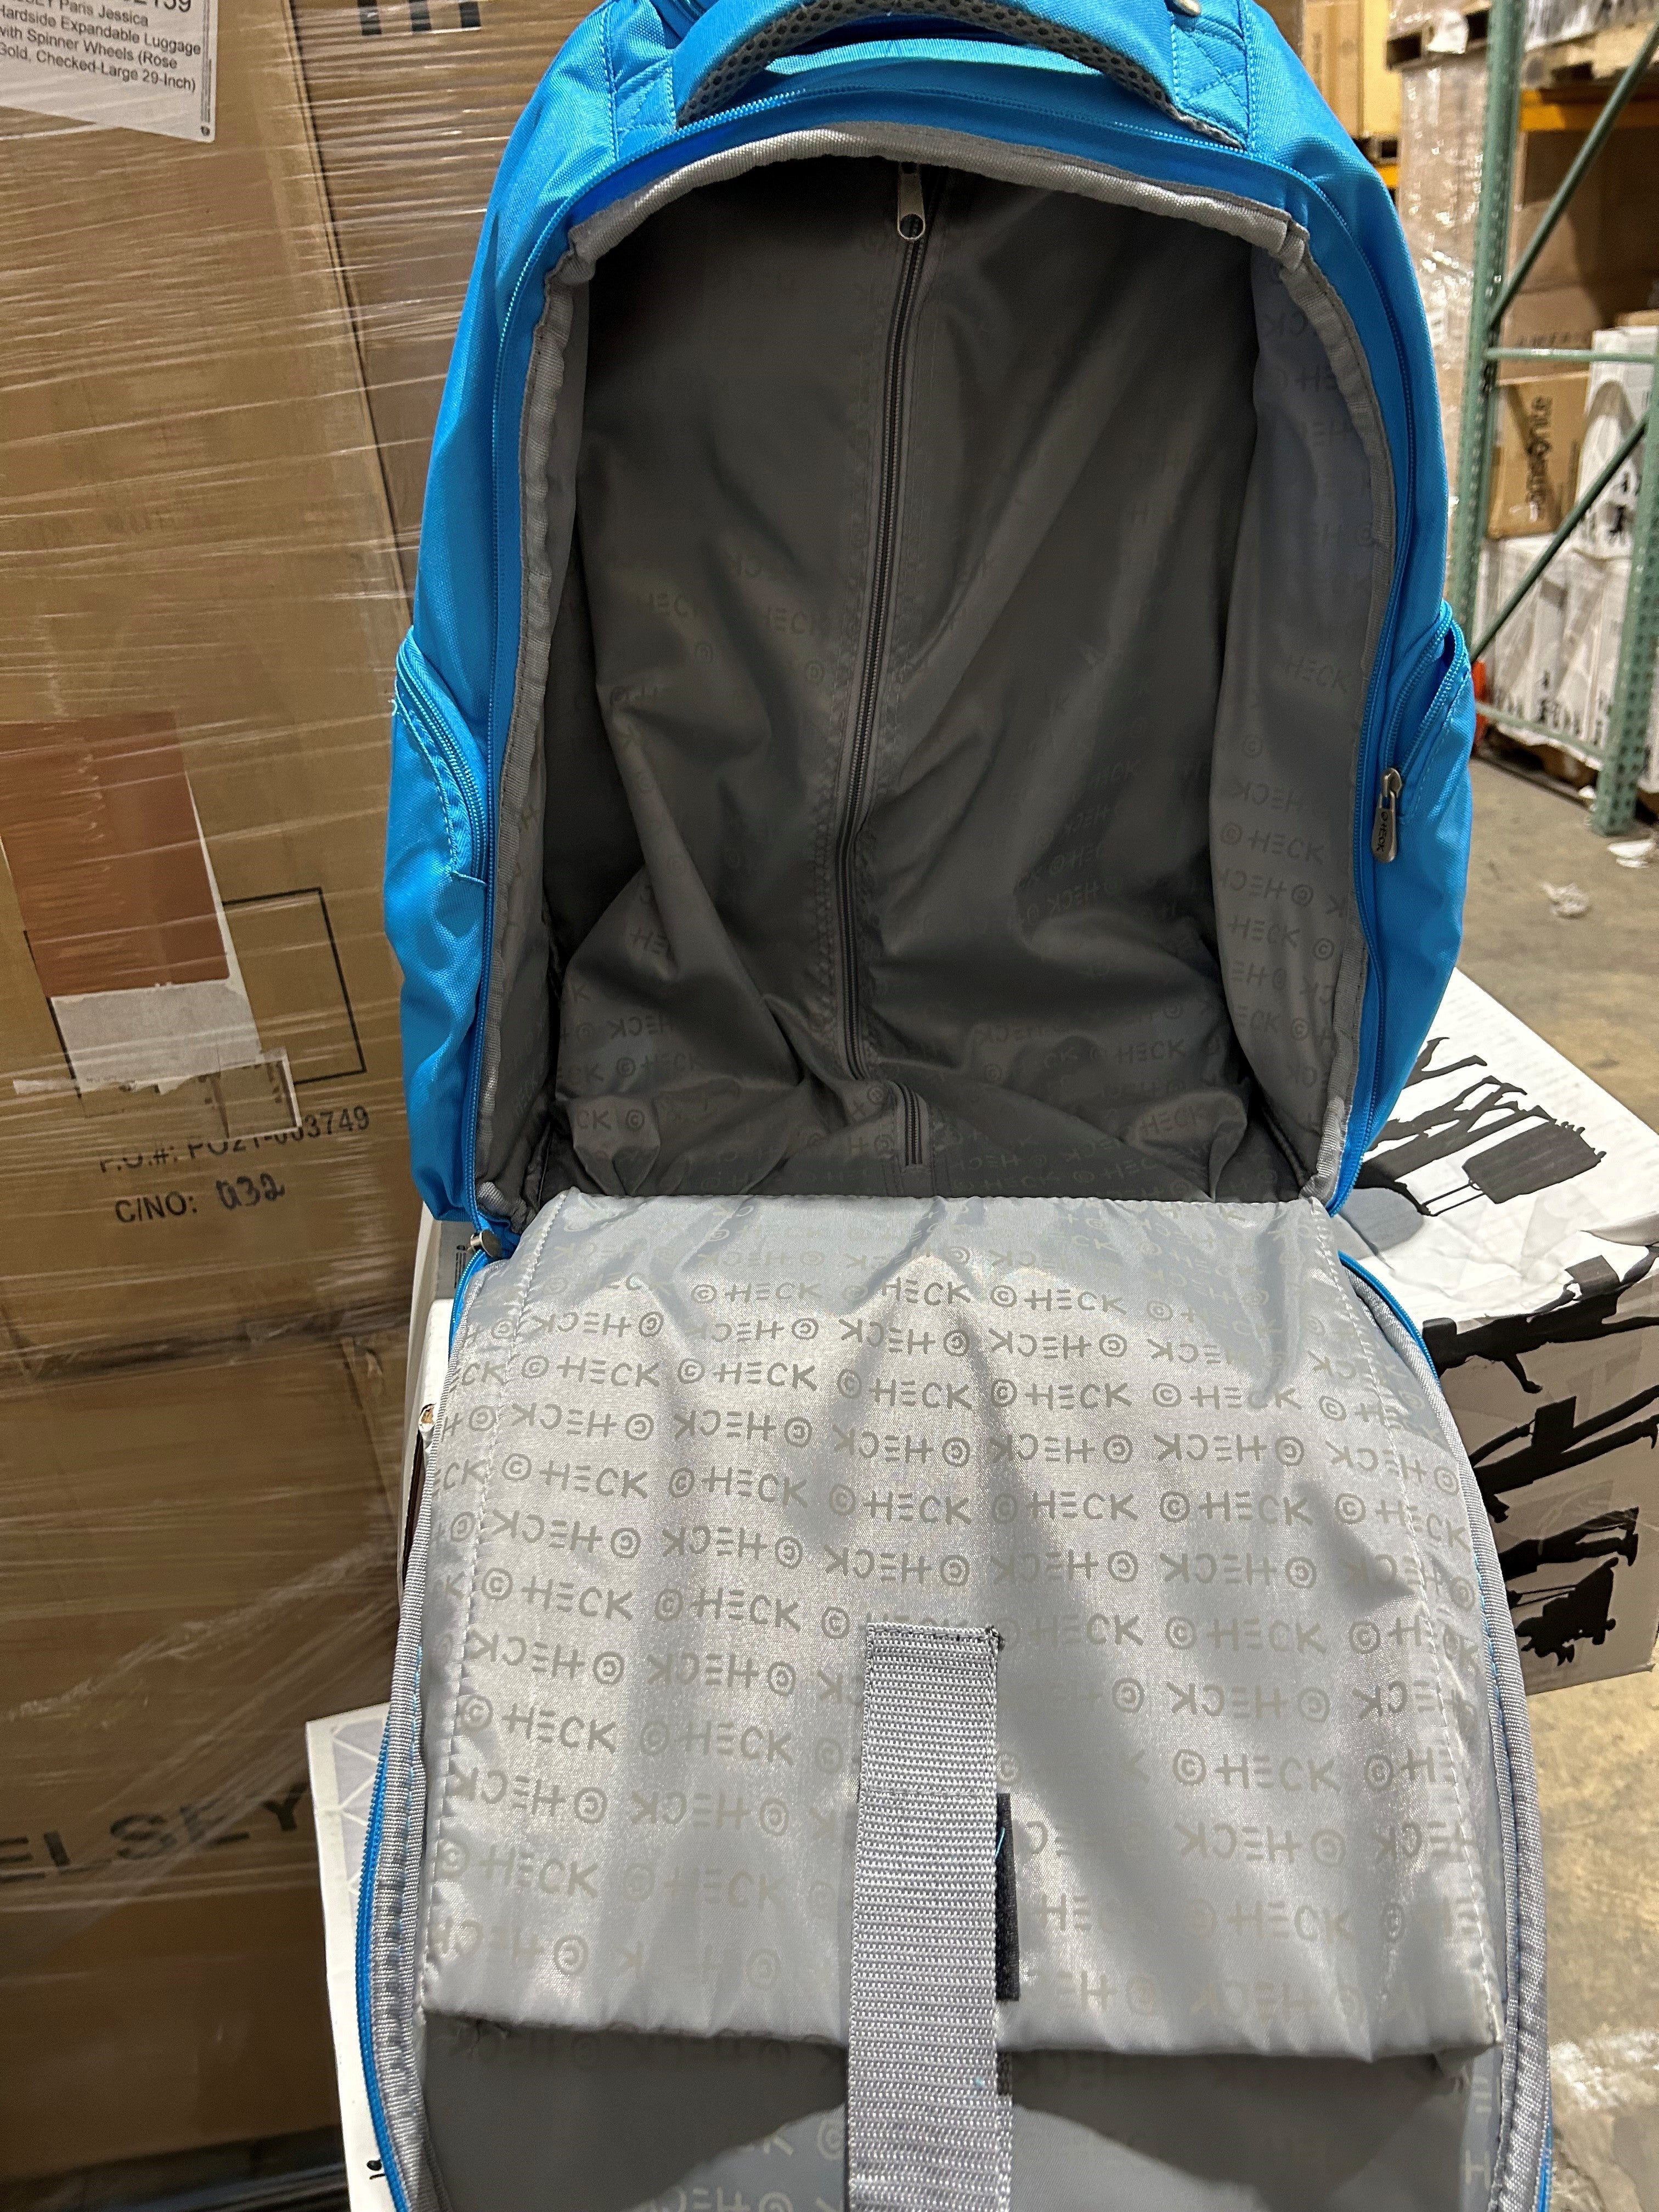 Ed Heck Aviator Wheeled Backpack 20 Inch, Sky Blue, One Size U1